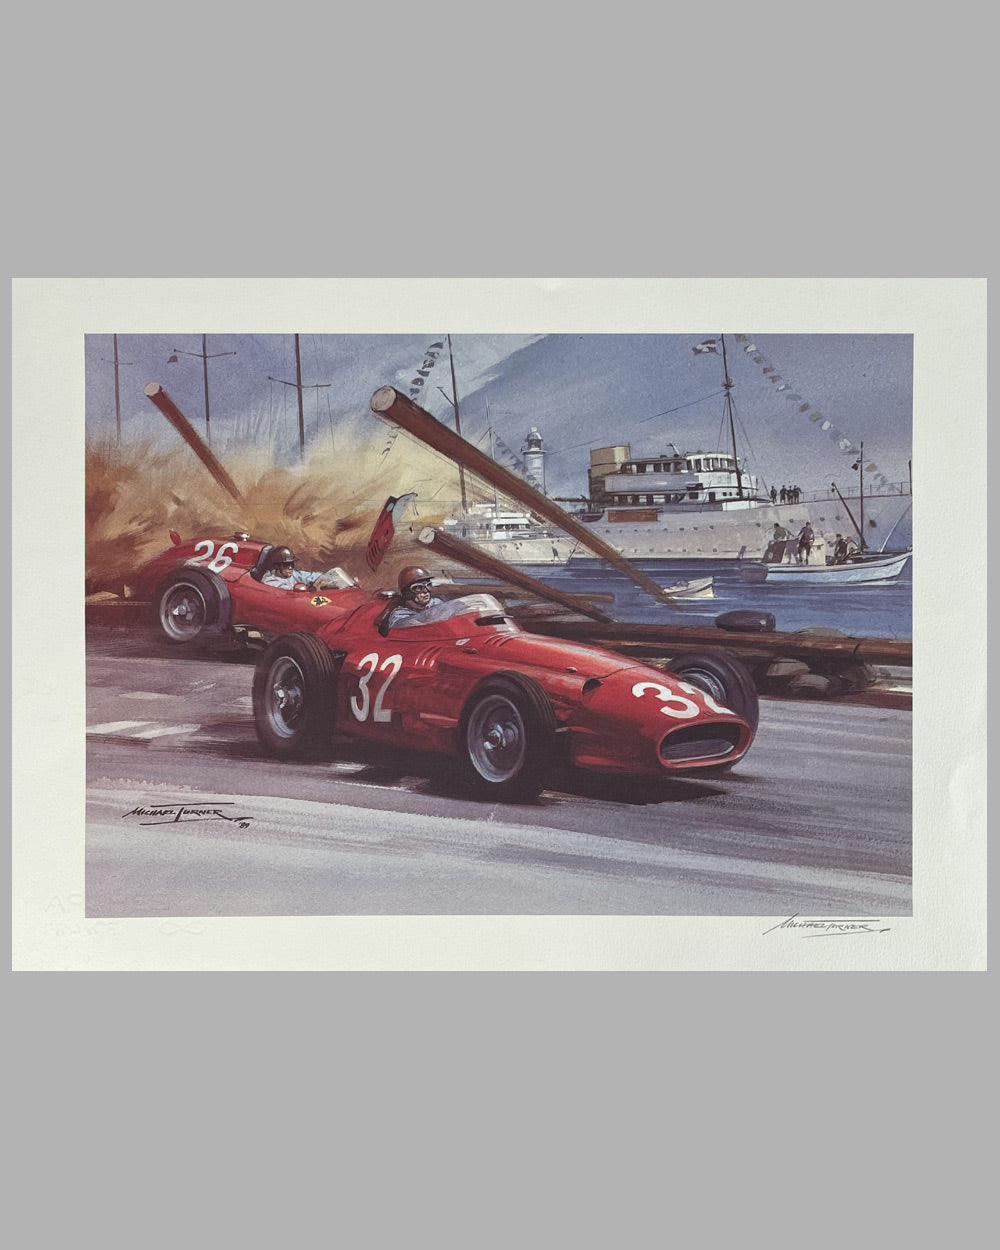 1957 Grand Prix of Monaco lithograph by Michael Turner